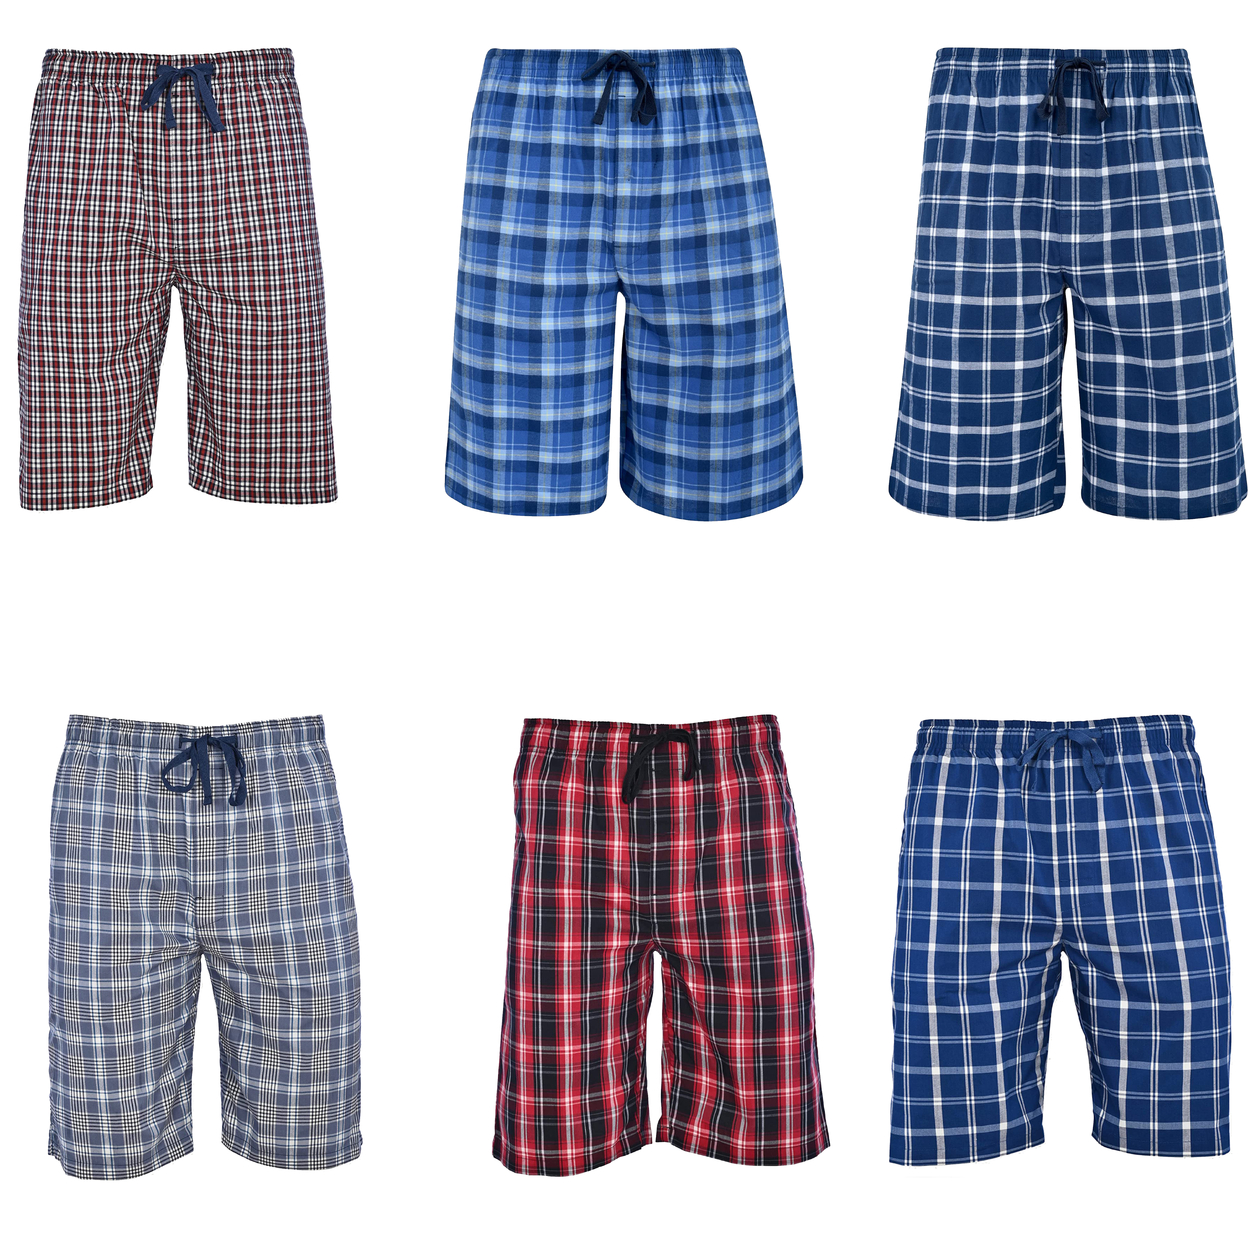 Men's Ultra-Soft Plaid Lounge Pajama Sleep Wear Shorts - Red, X-large